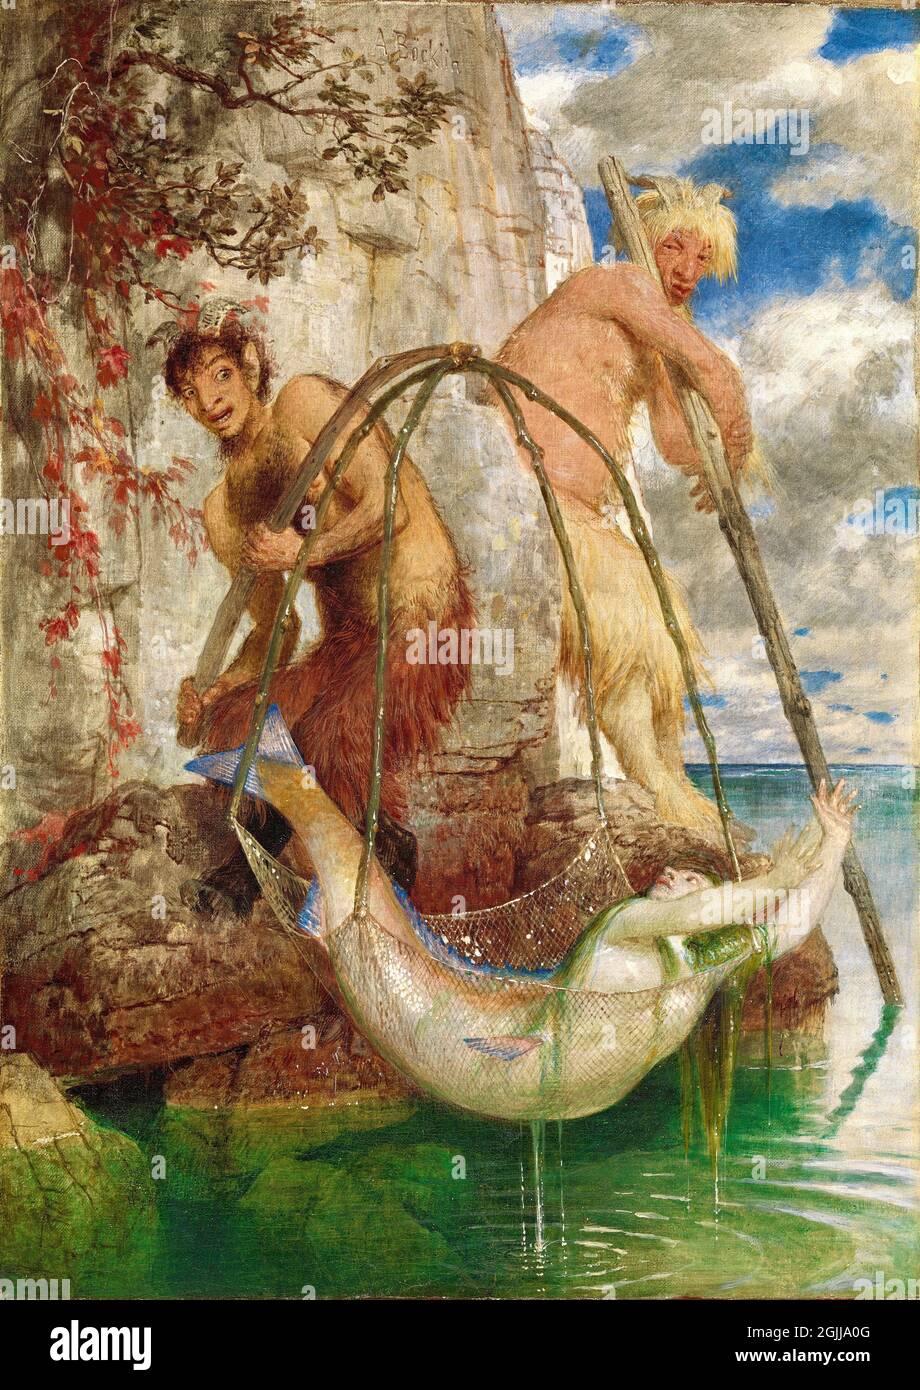 Arnold Böcklin artwork - Two Fishing Pans - 1874 - Two fishermen